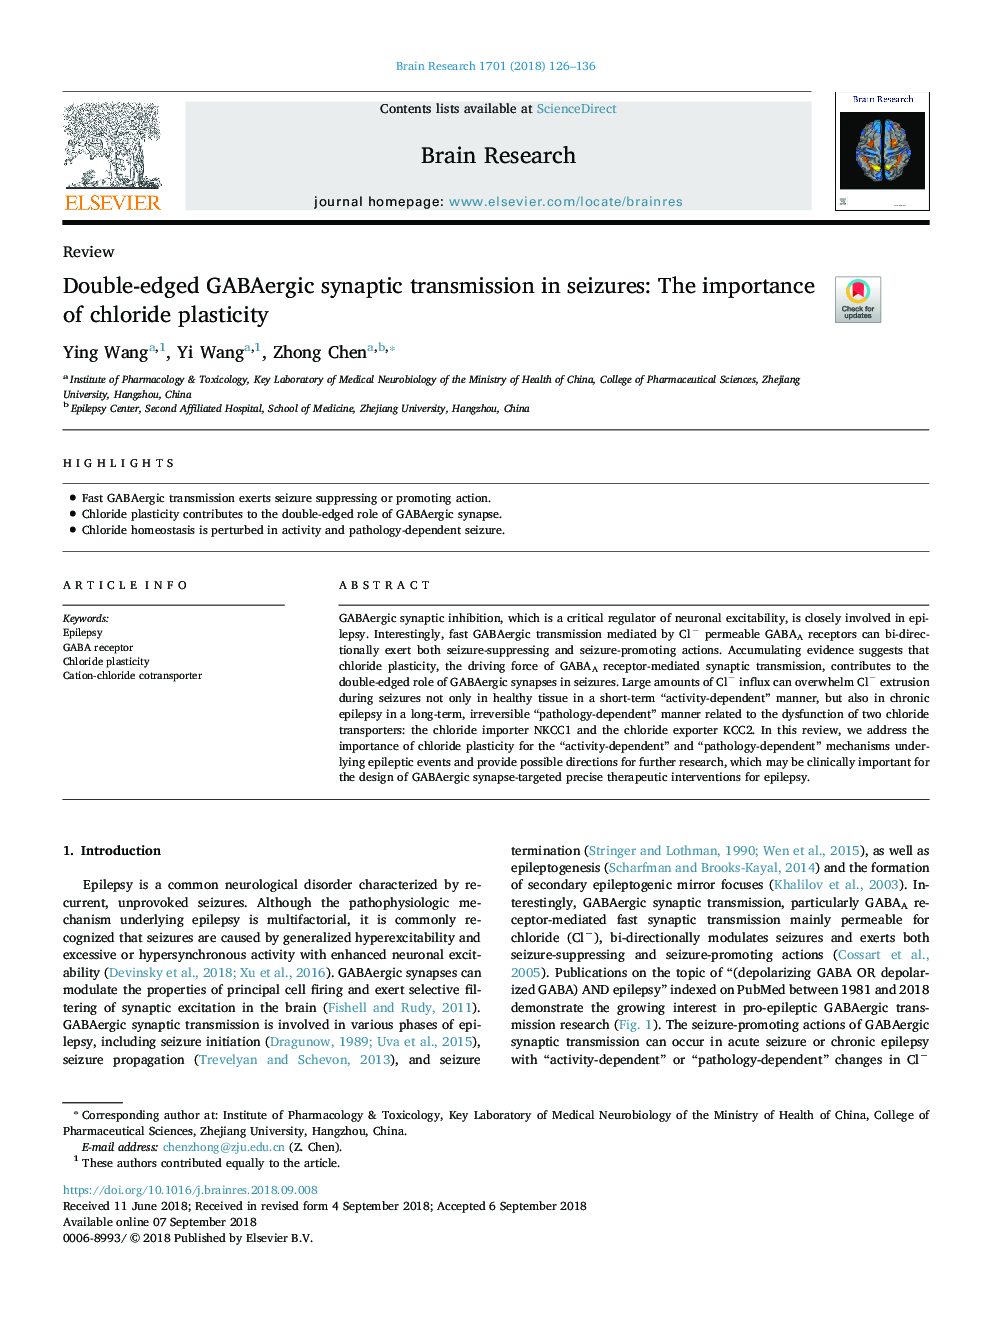 Double-edged GABAergic synaptic transmission in seizures: The importance of chloride plasticity